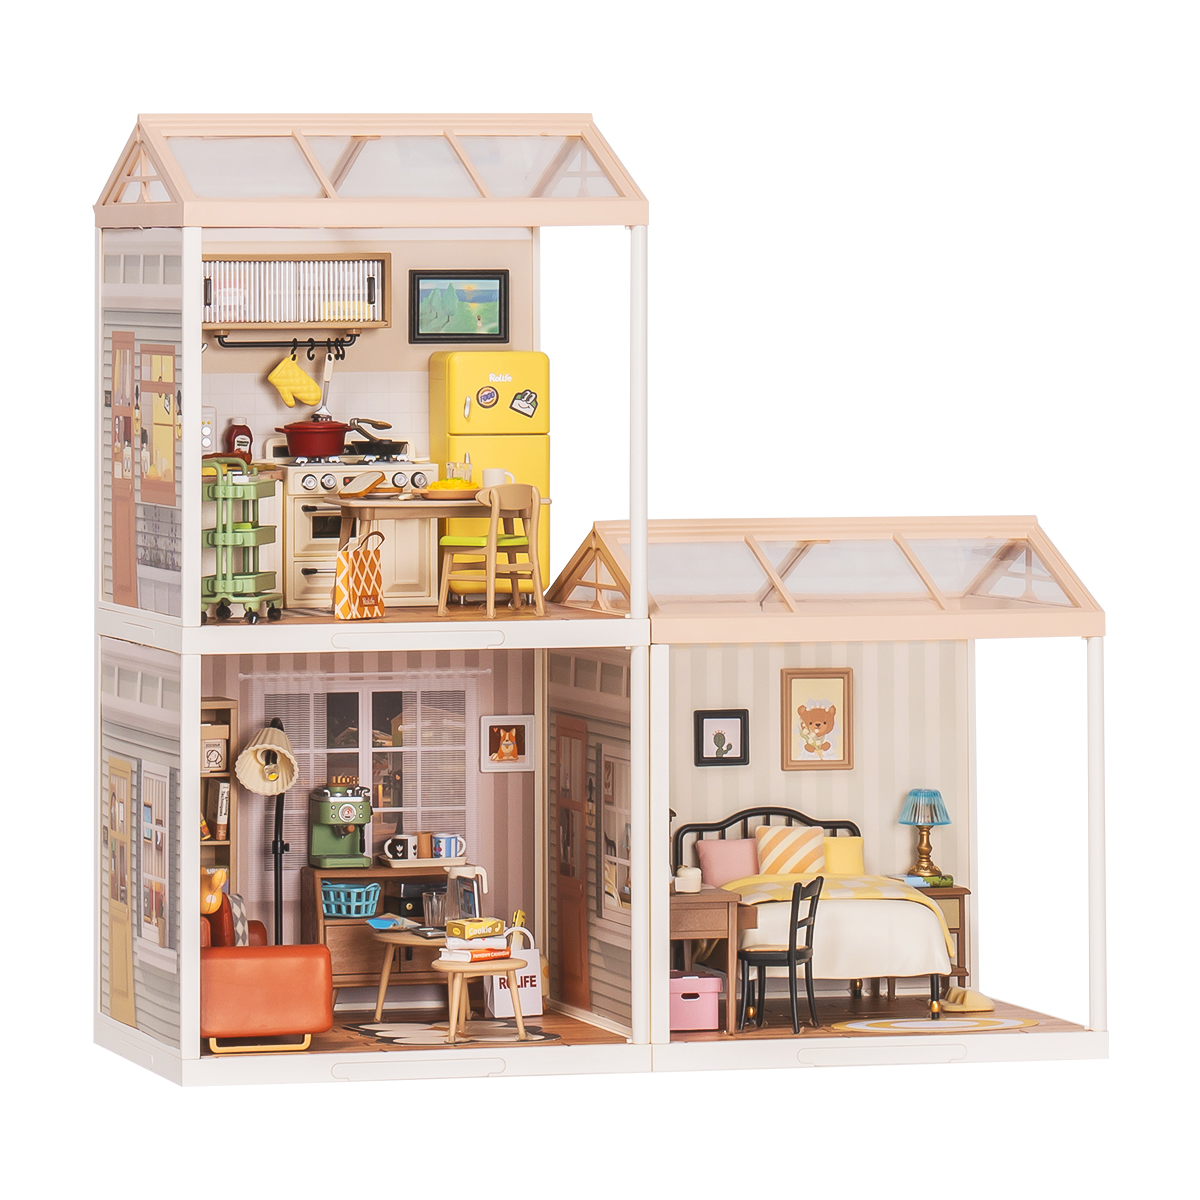 Rolife Super Creator Plastic Diy Mini House 3 in 1 L Shape